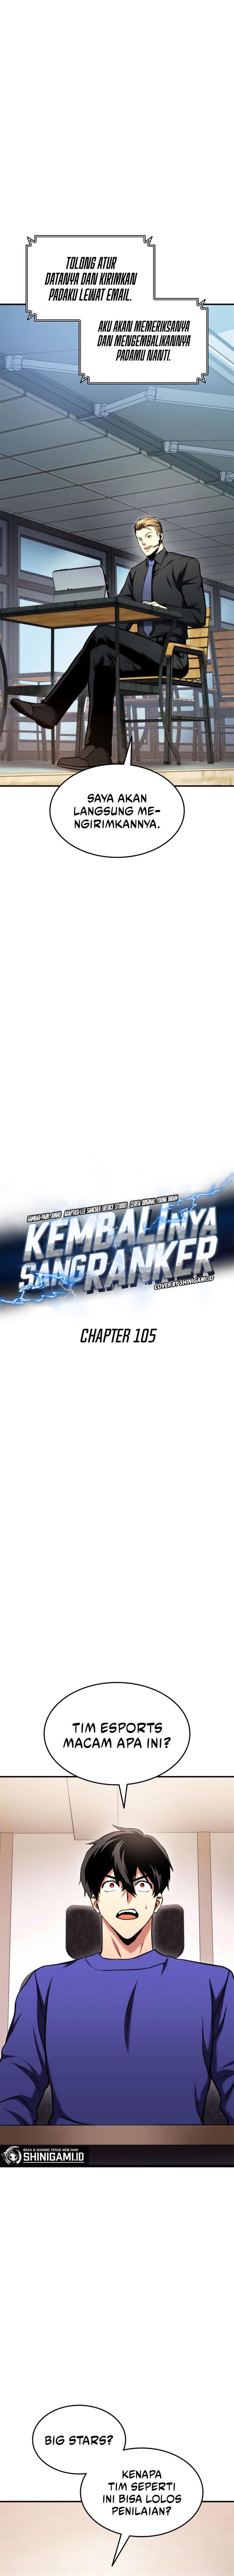 Ranker’s Return (Remake) Chapter 105